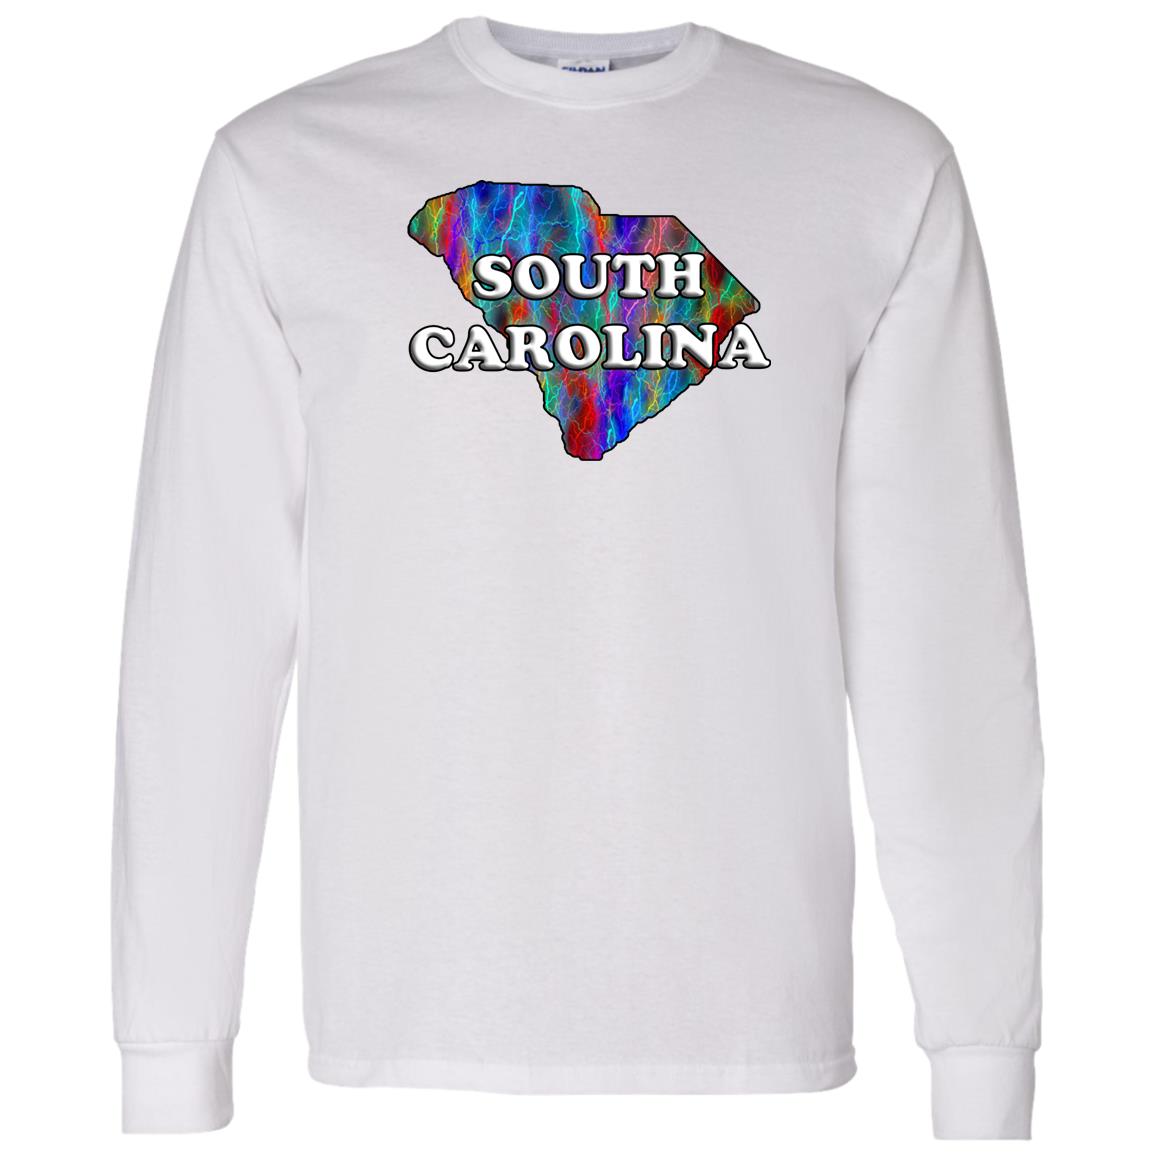 South Carolina Long Sleeve T-Shirt